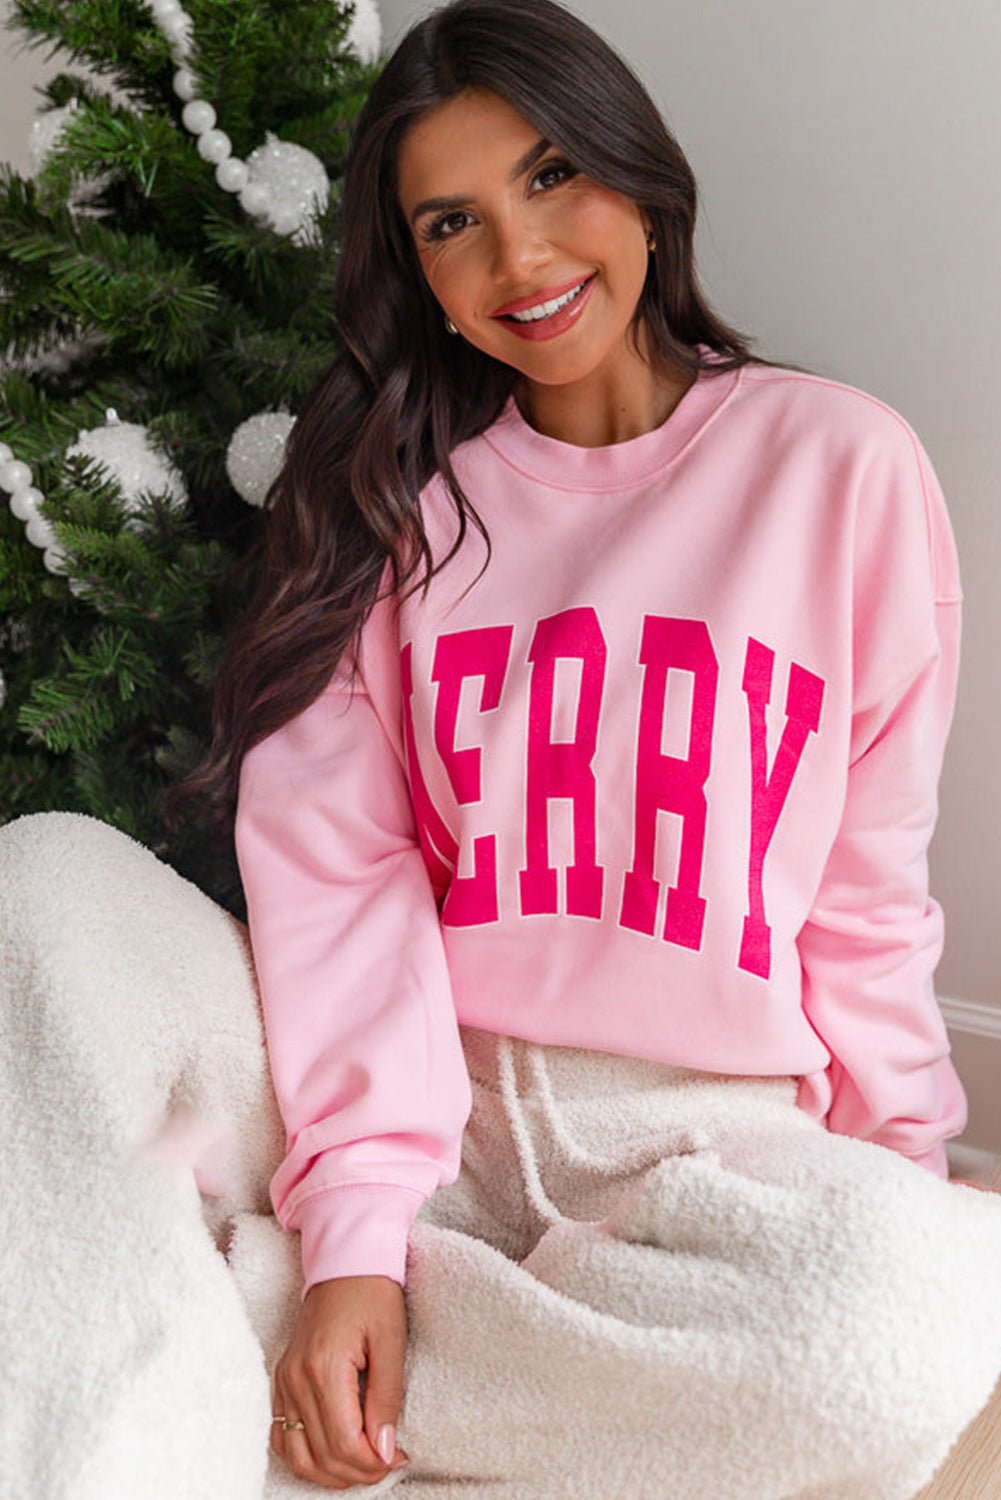 Loose Fit MERRY Christmas Sweatshirt | Fashionsarah.com